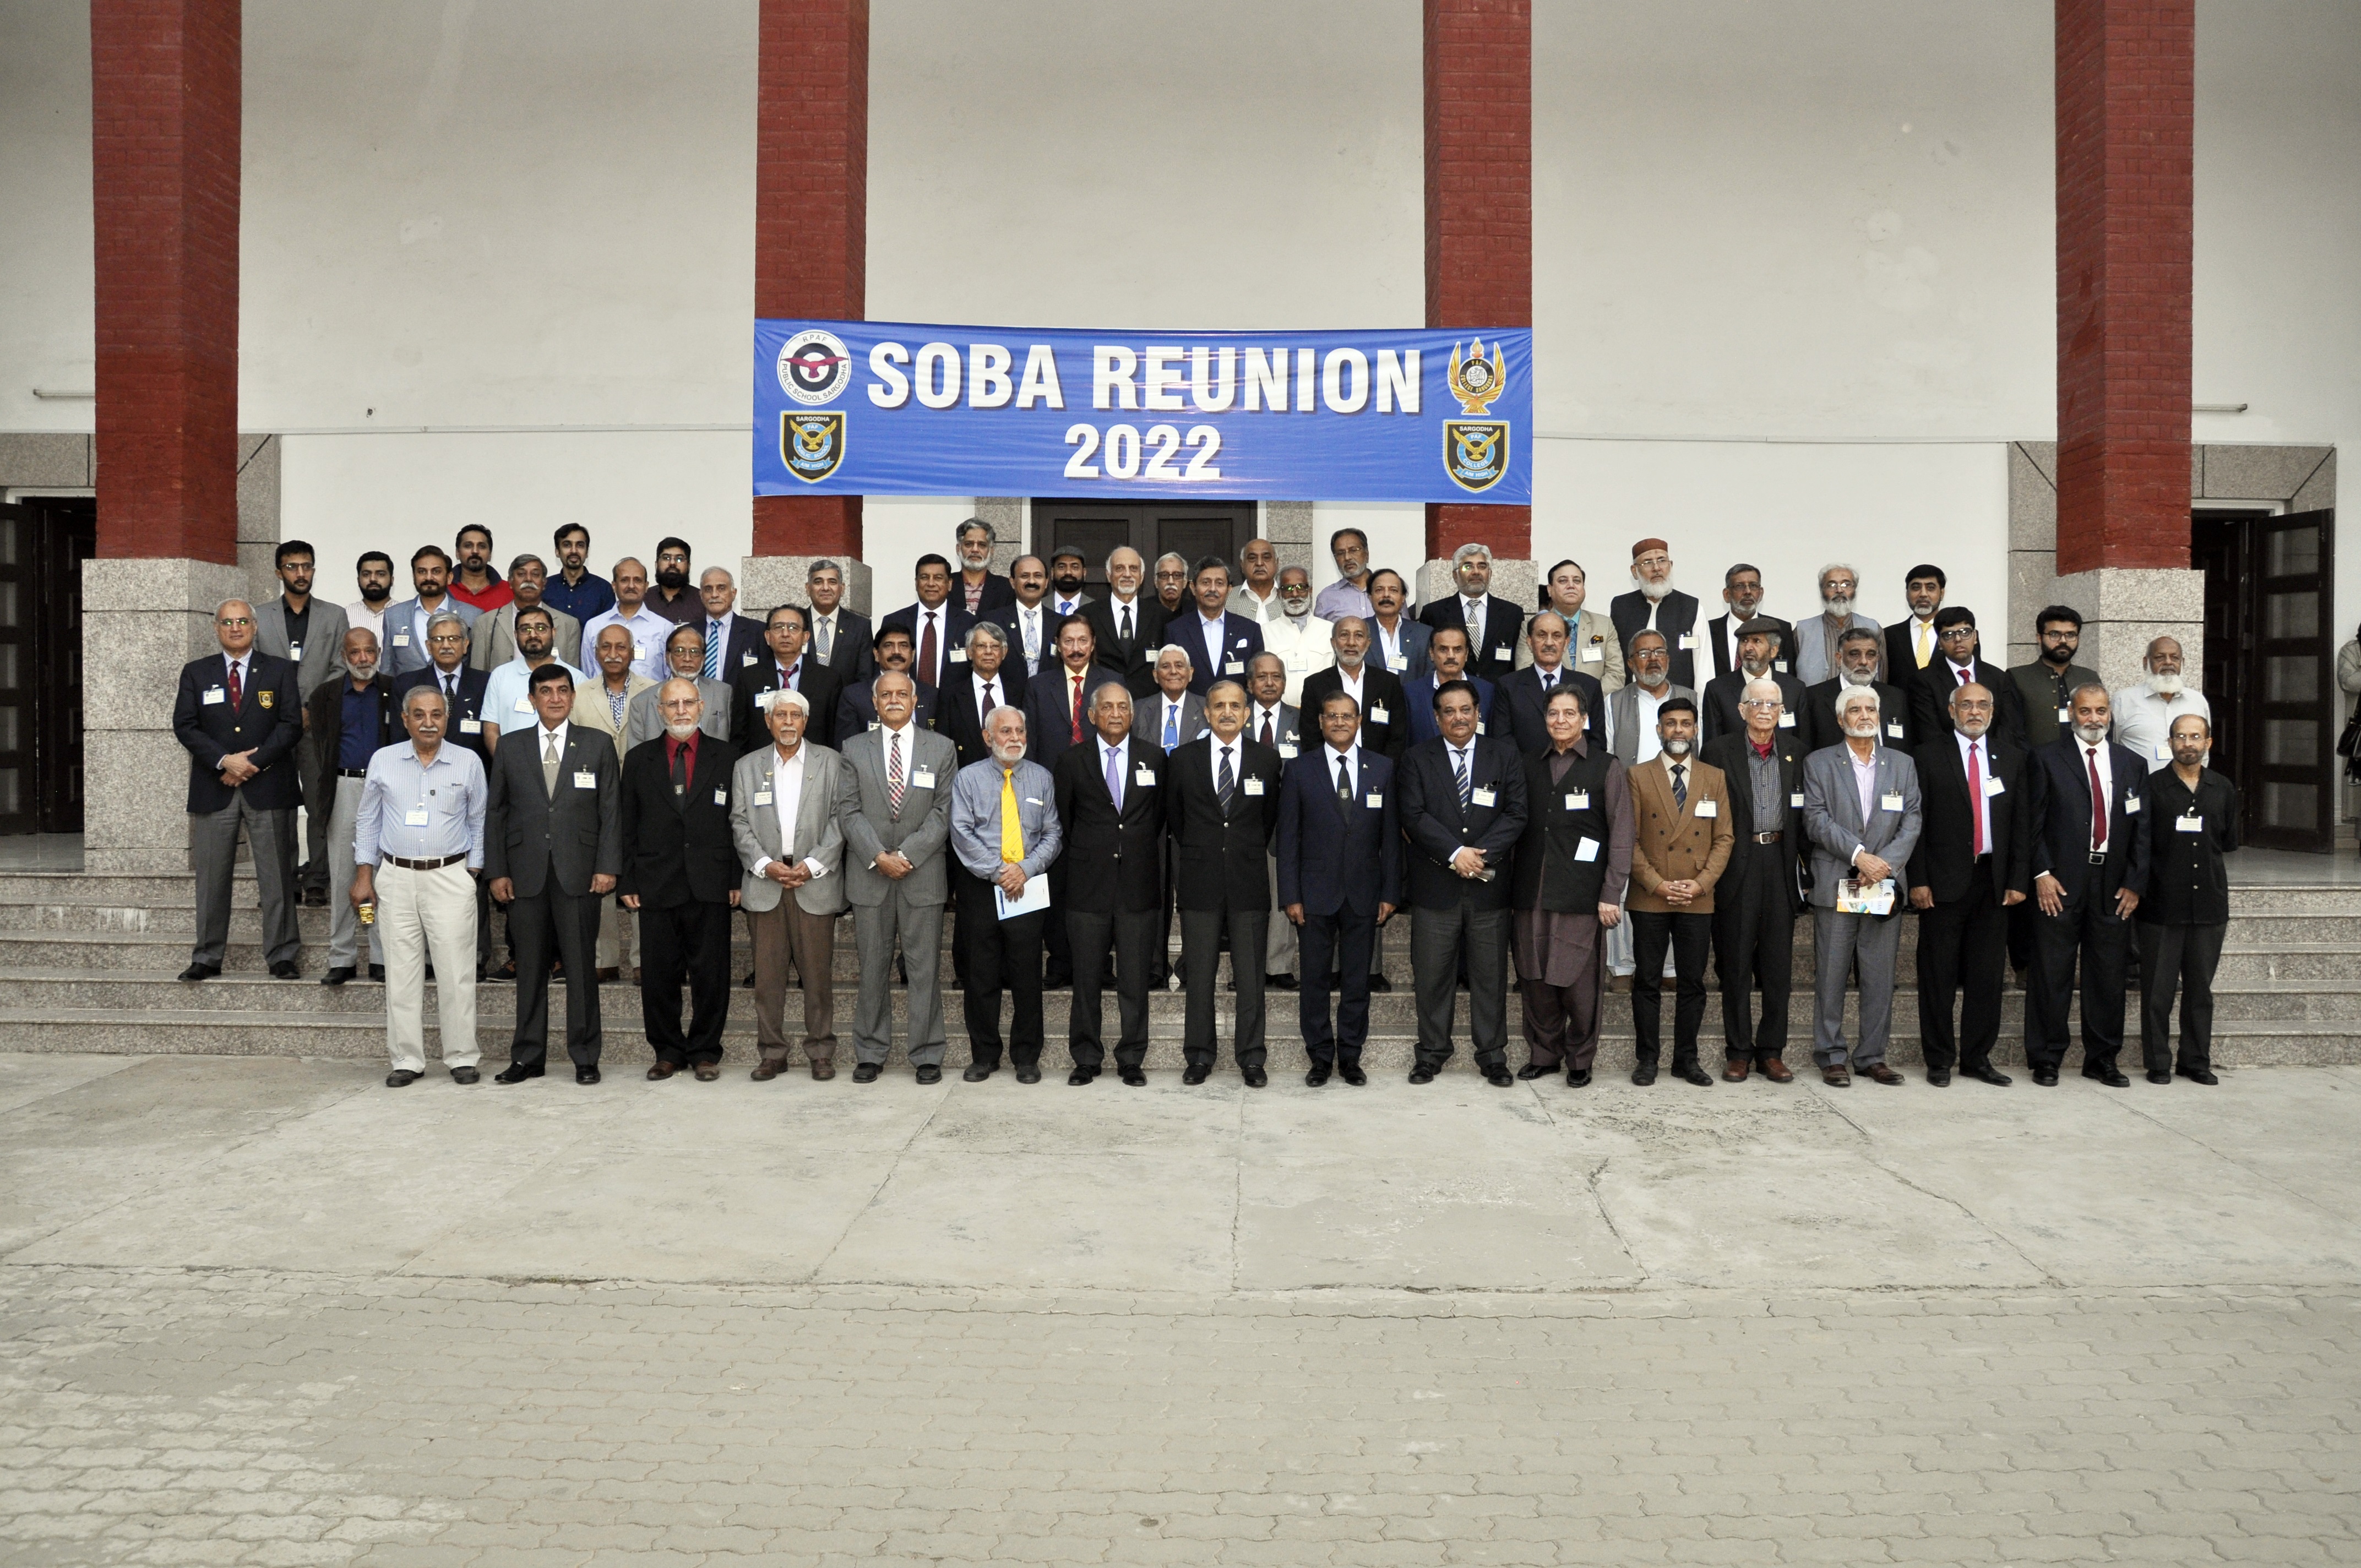 SOBA Re Union 2022 Report